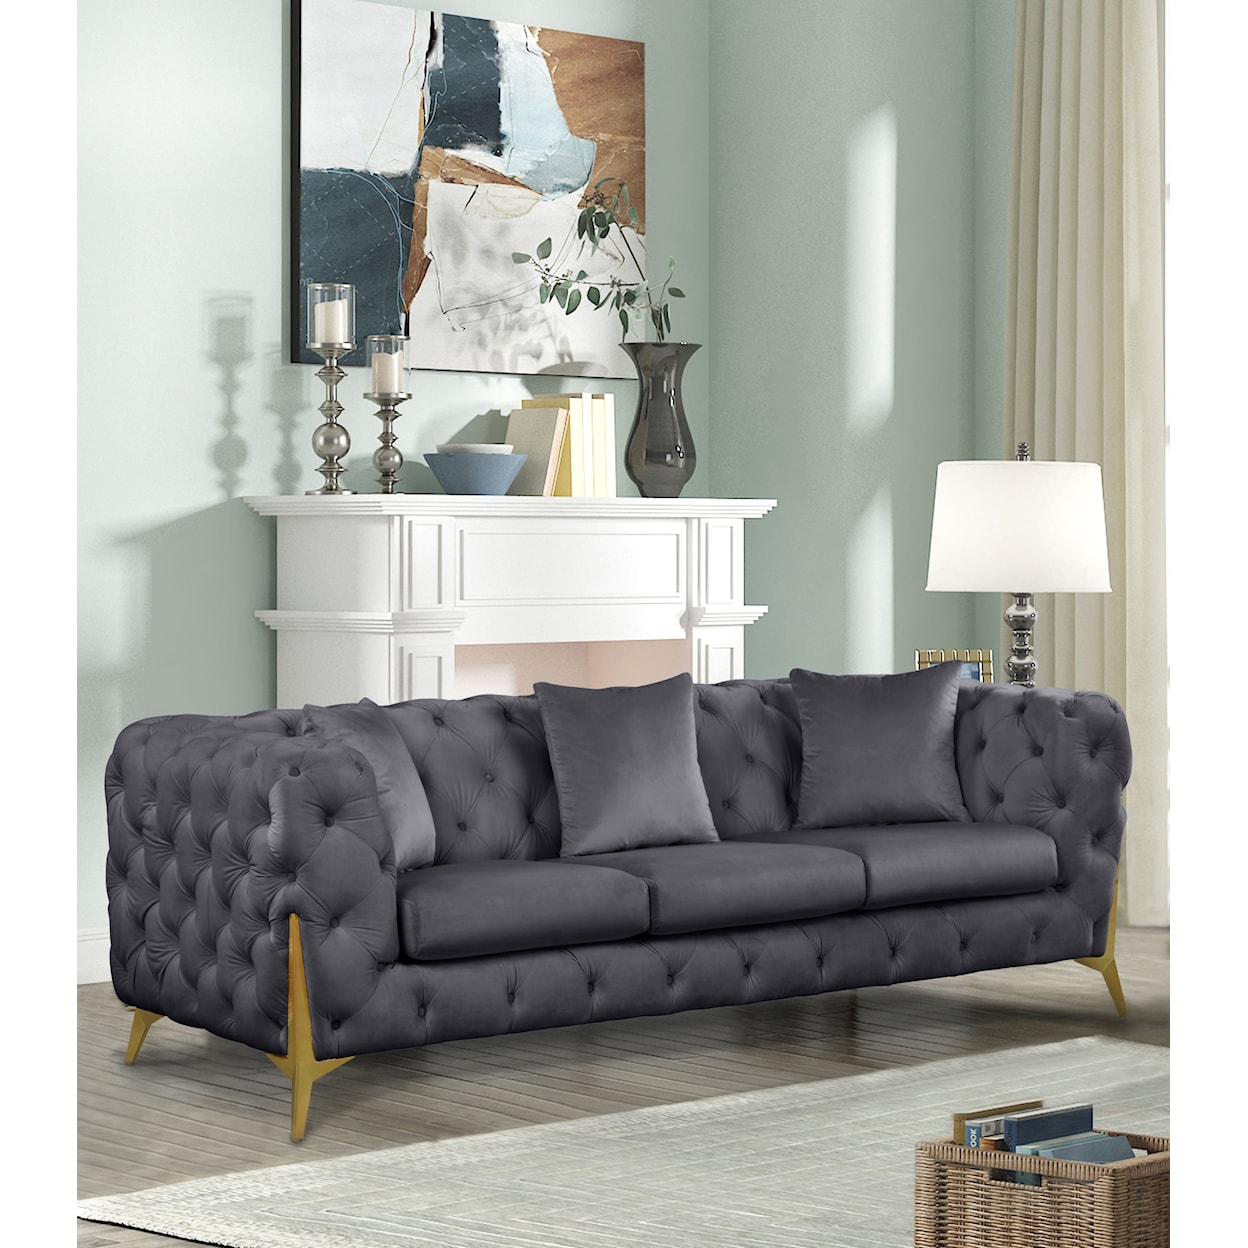 Meridian Furniture Kingdom Sofa